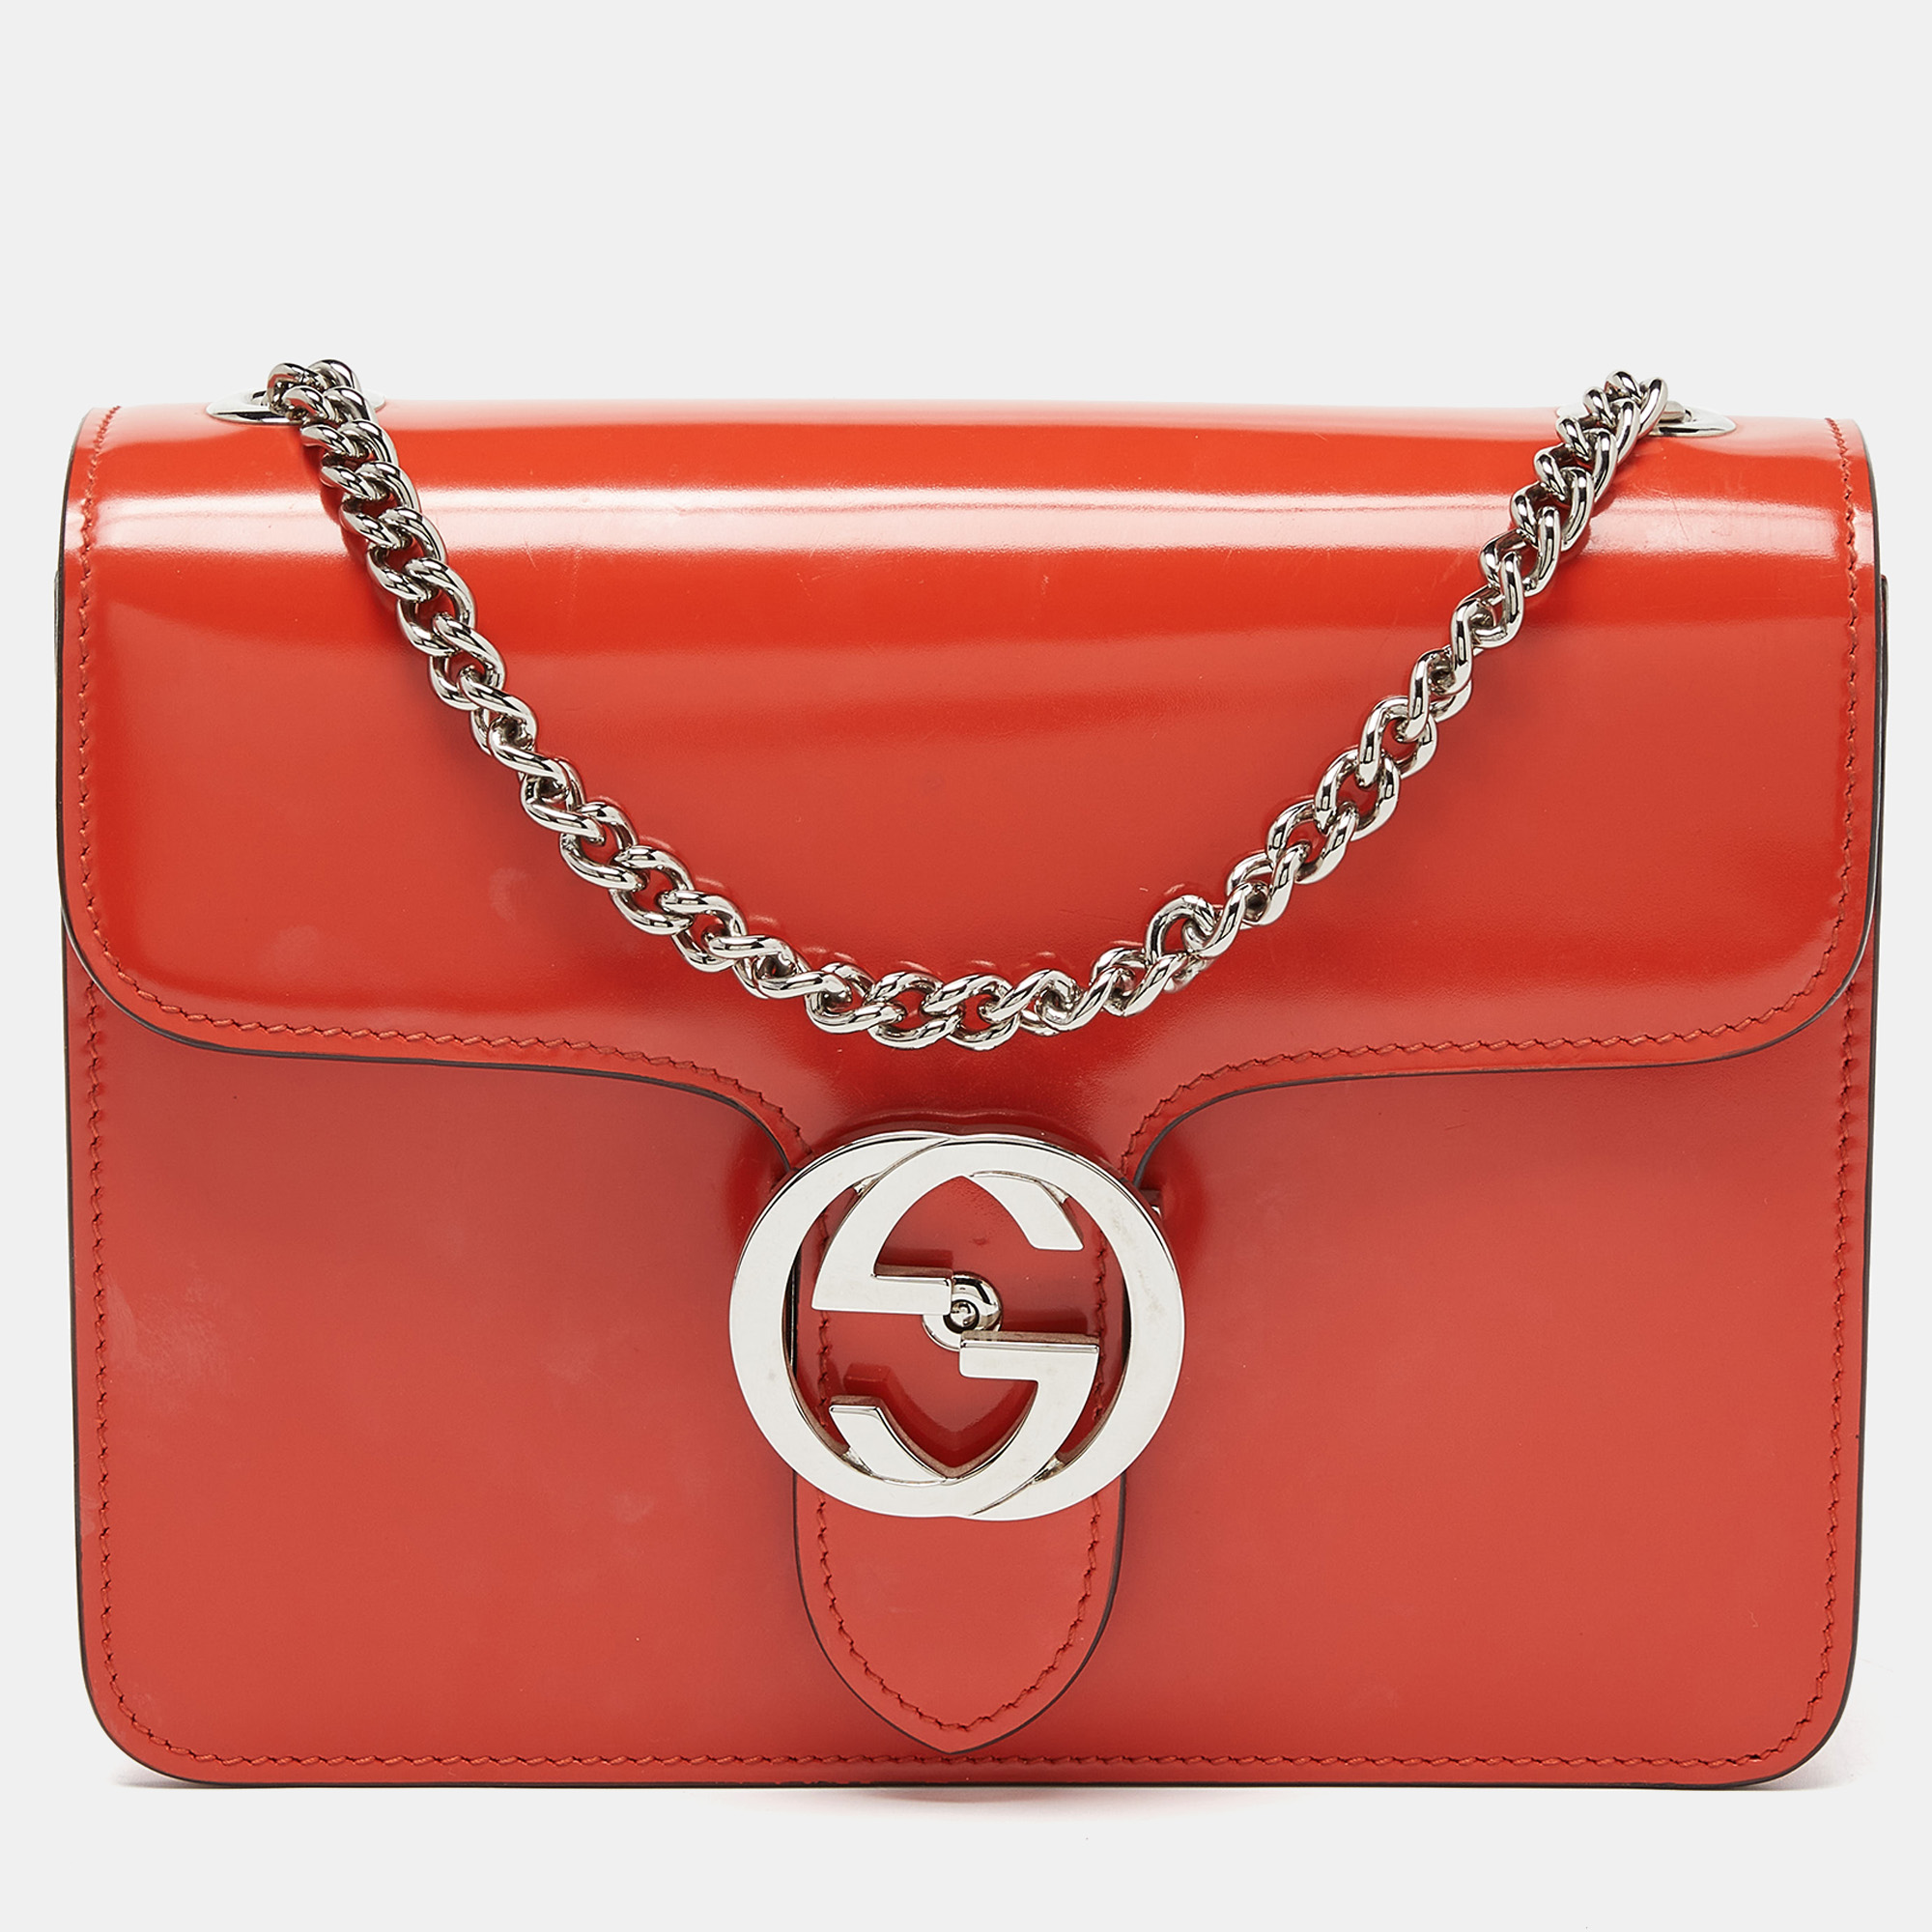 Pre-owned Gucci Orange Patent Leather Small Interlocking G Crossbody Bag